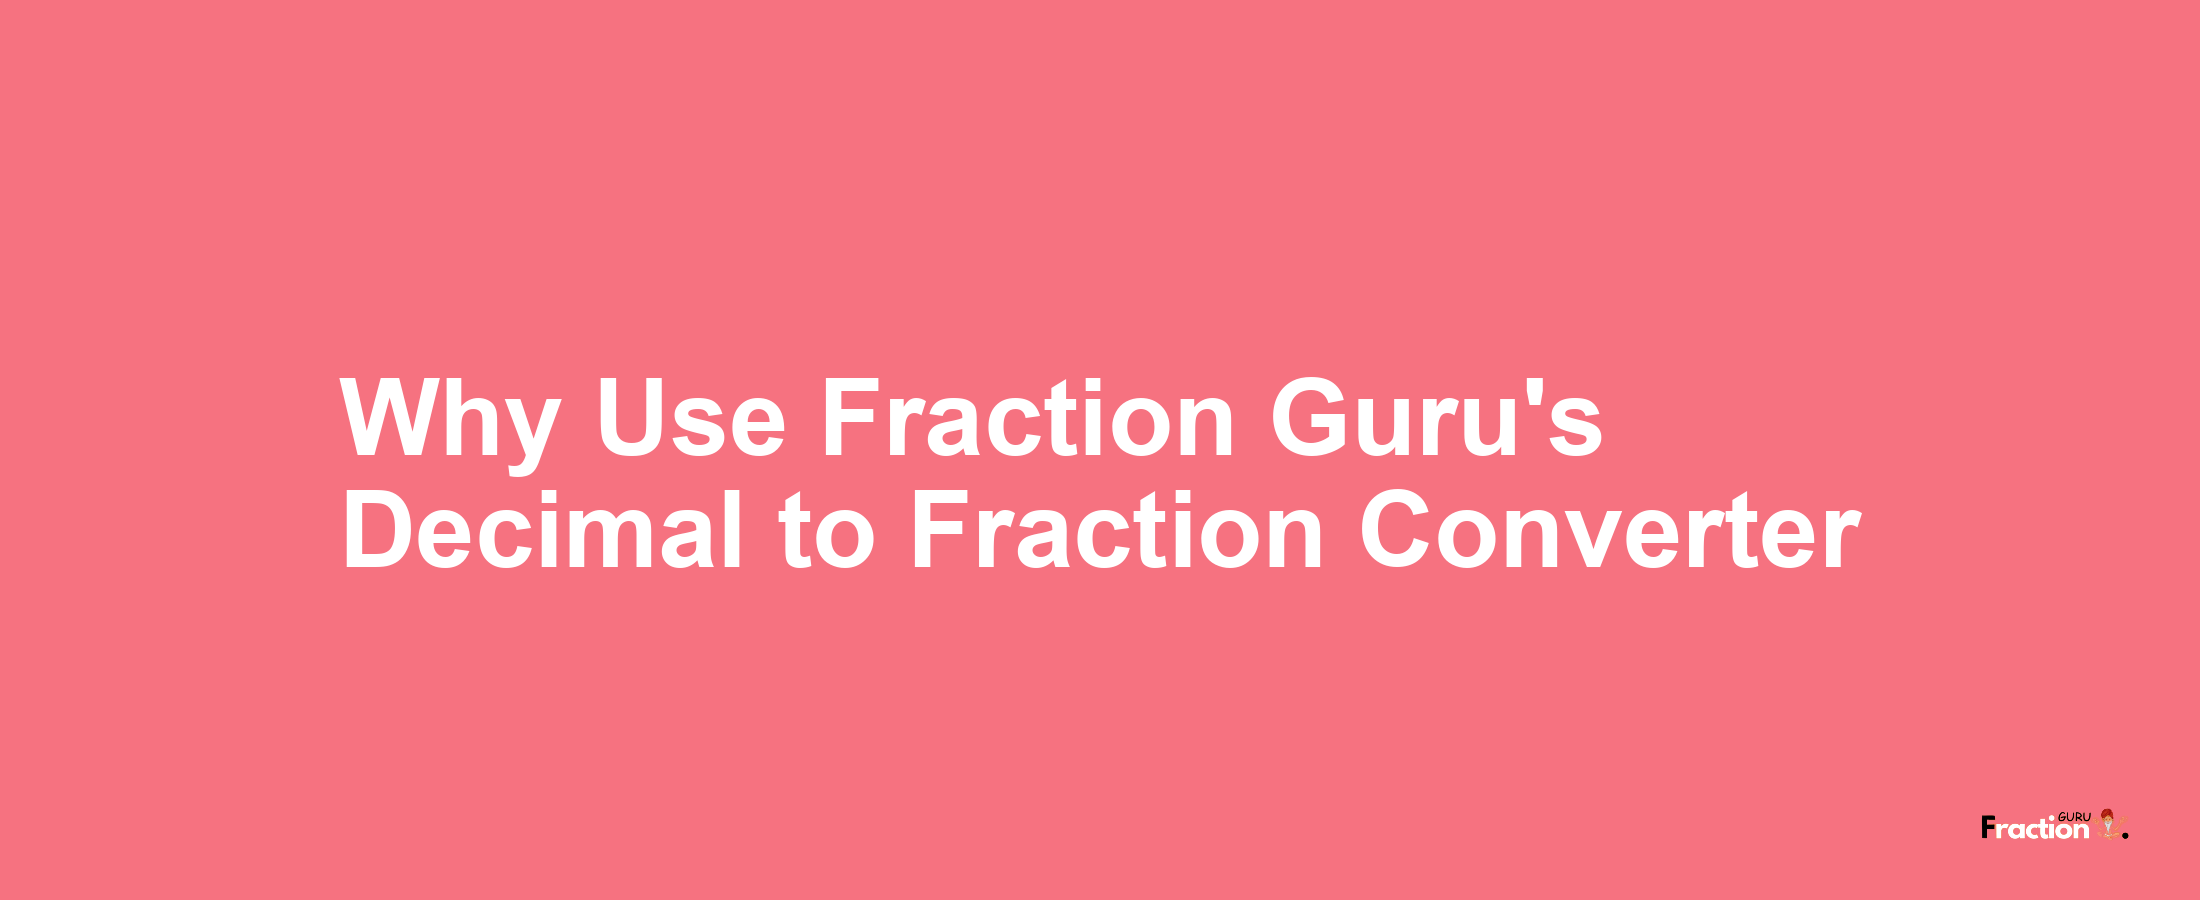 Why Use Fraction Guru's Decimal to Fraction Converter